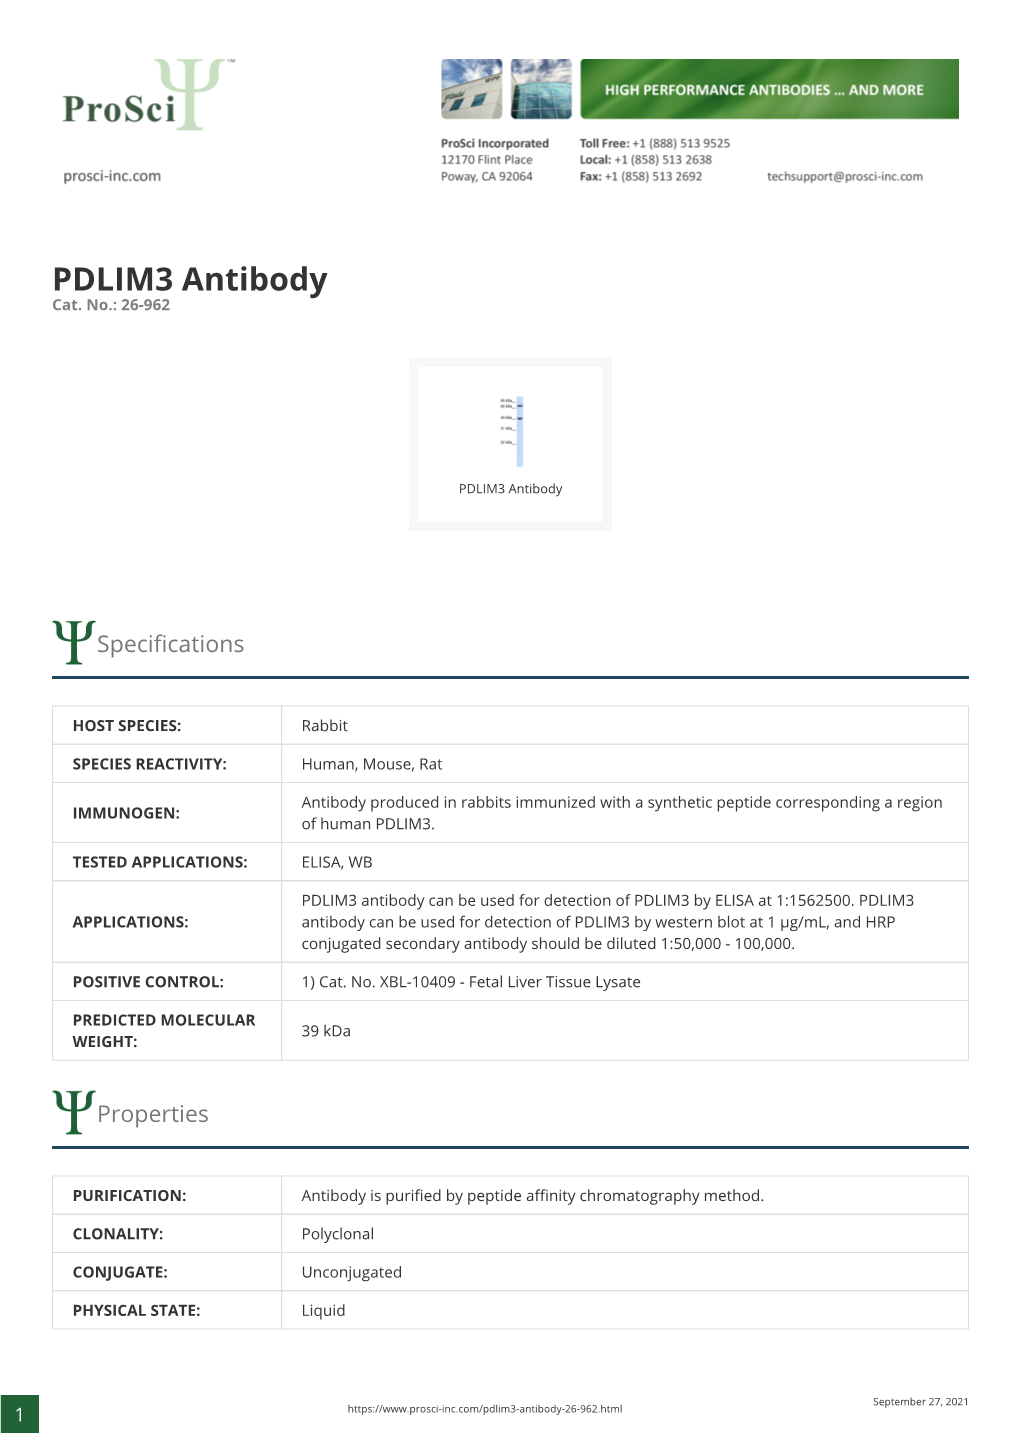 PDLIM3 Antibody Cat